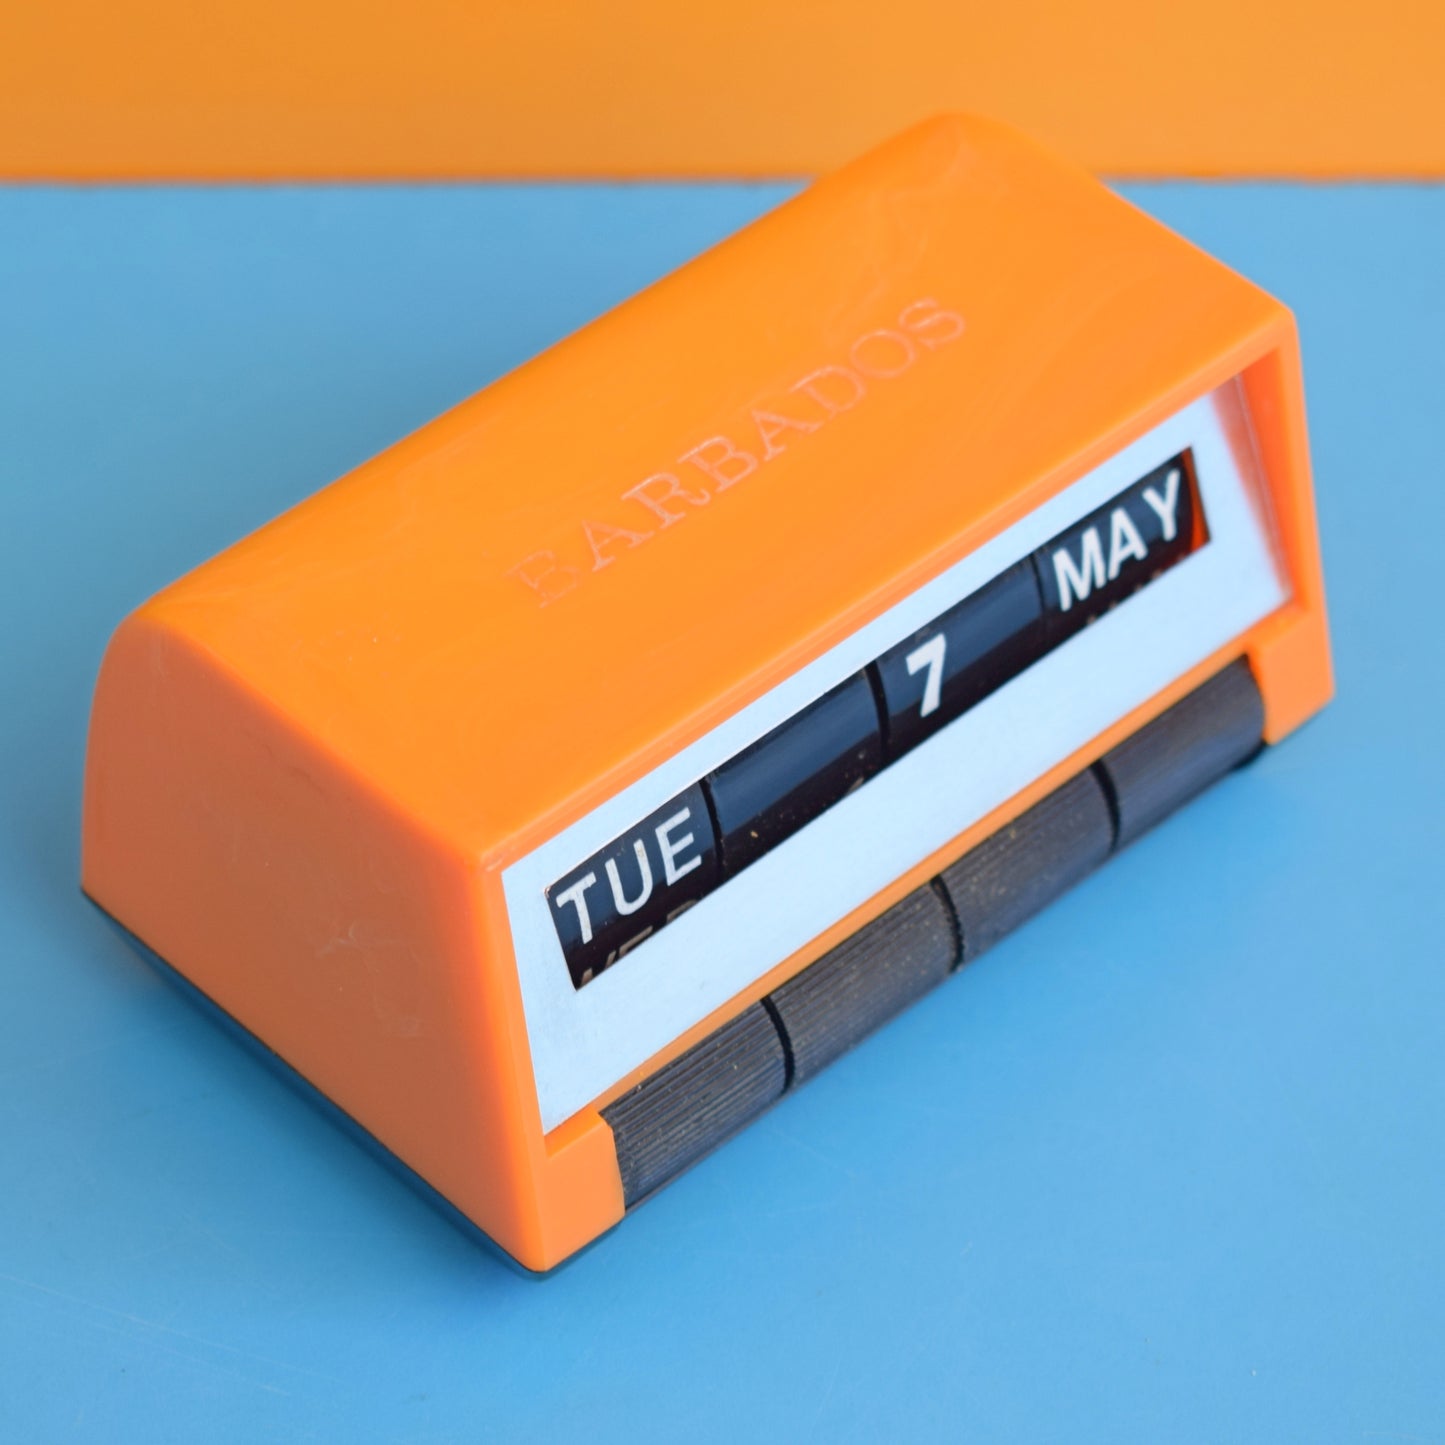 Vintage 1970s Plastic Perpetual Calendar - Orange